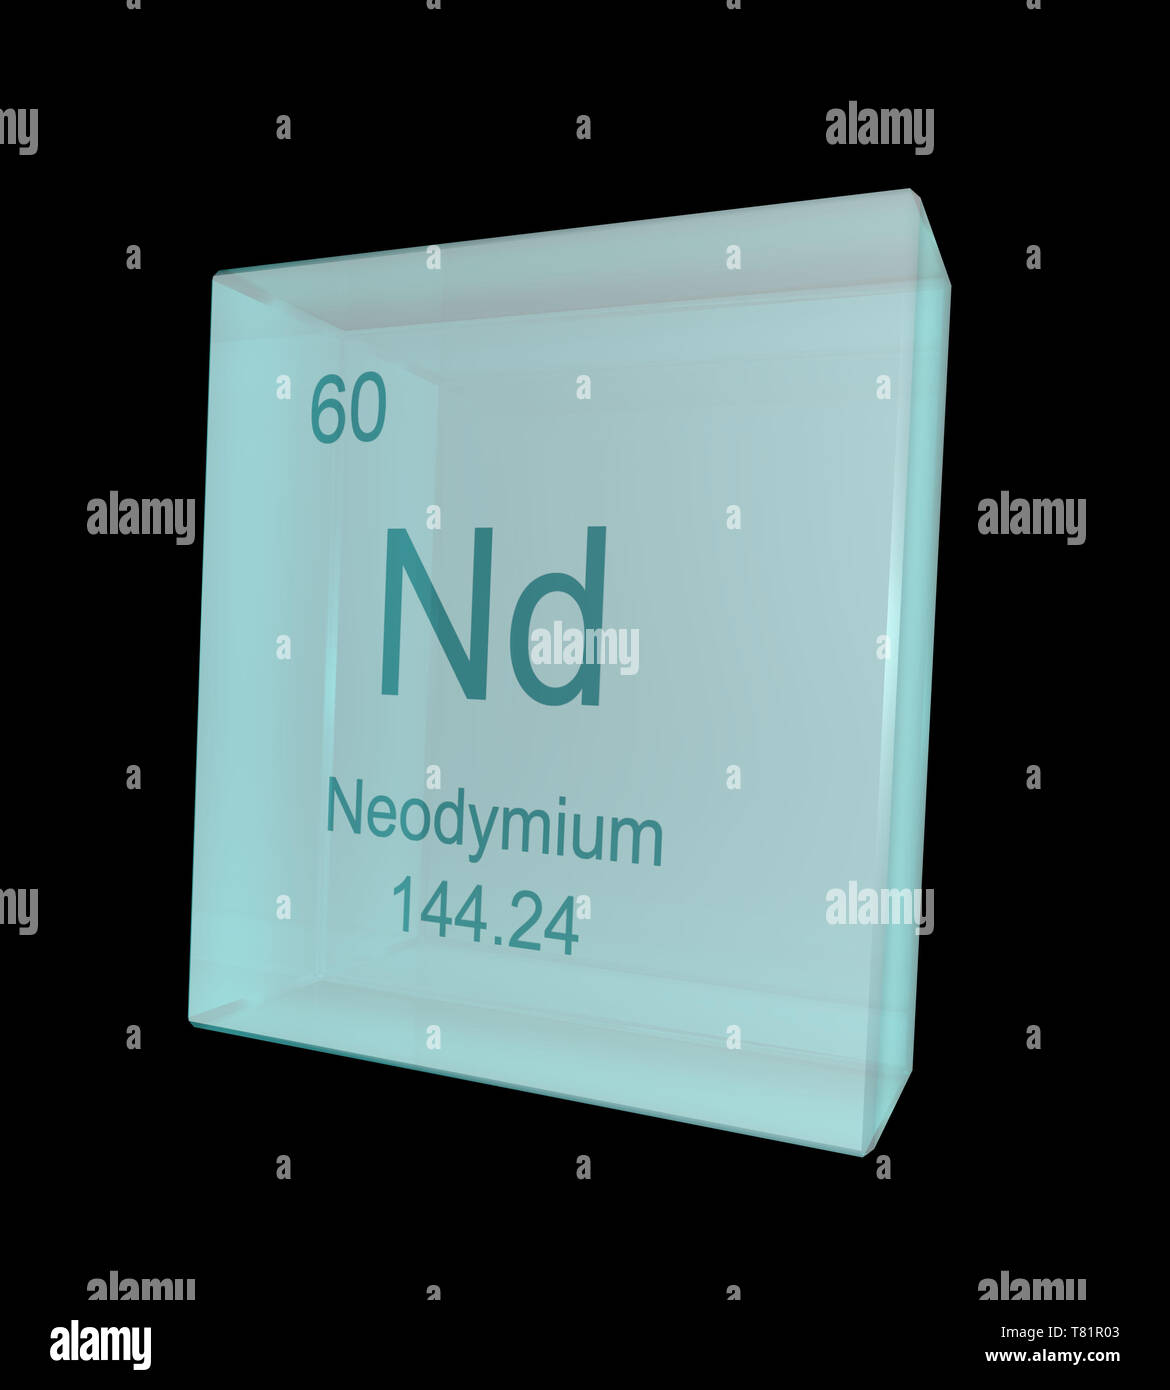 Neodymium, Chemical Element Symbol, Illustration Stock Photo